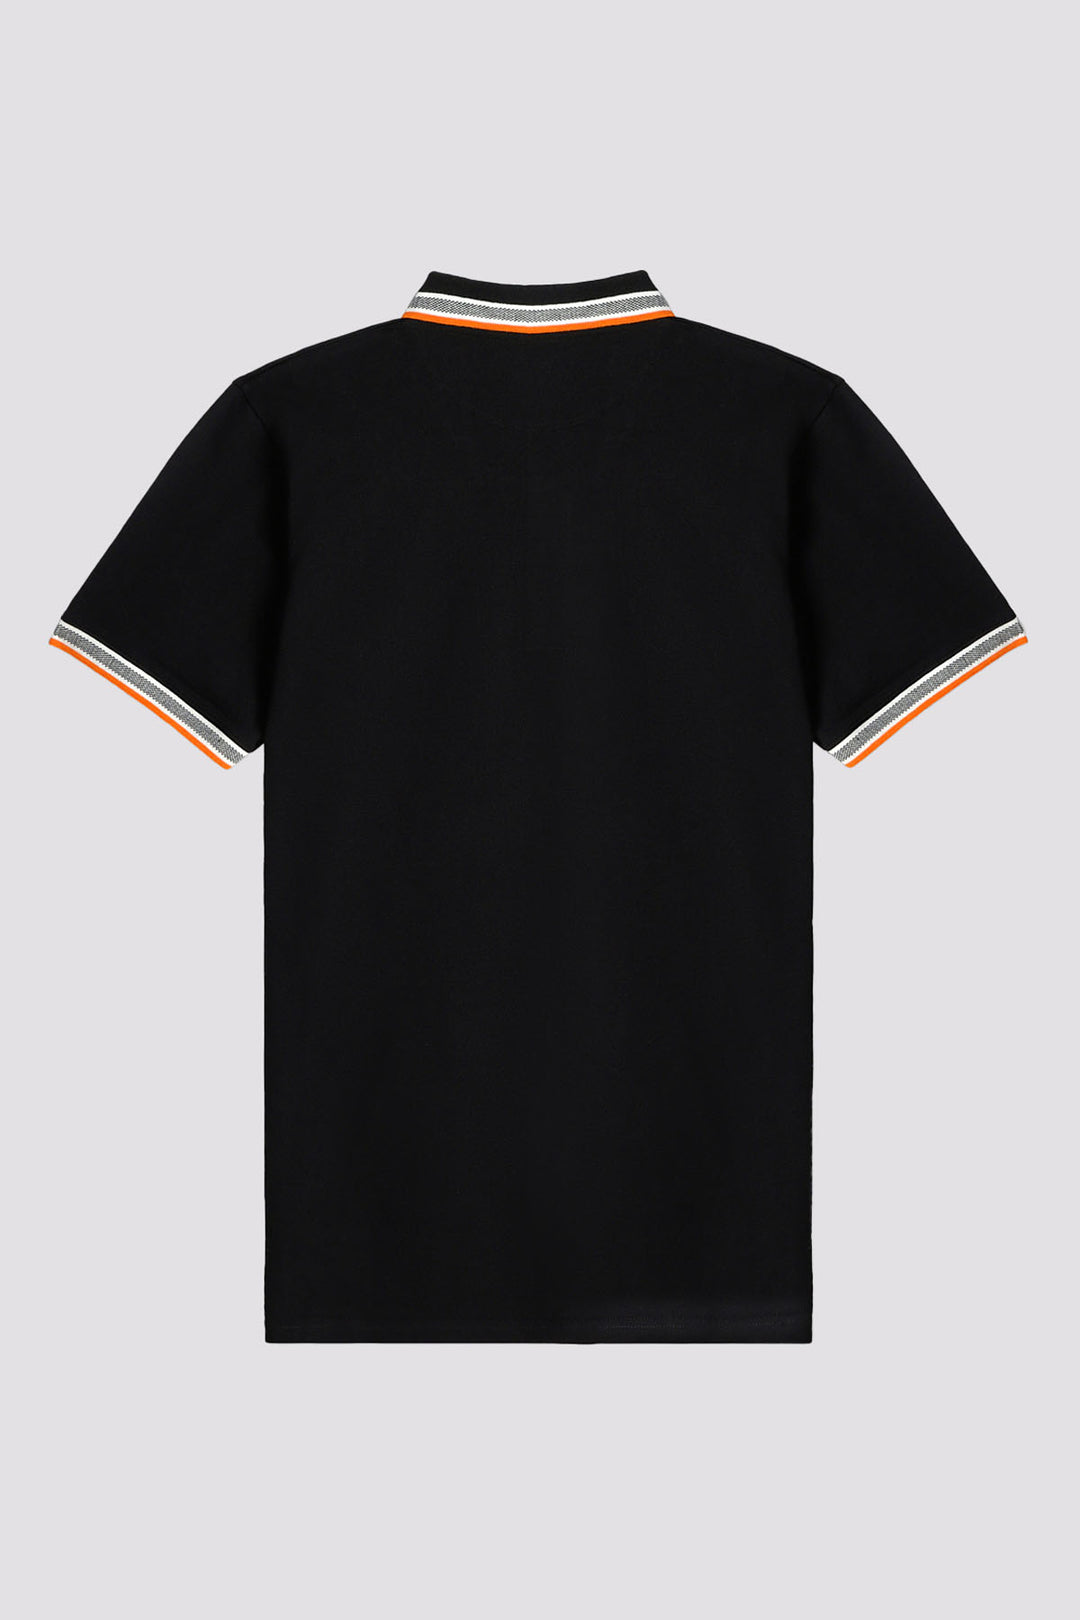 Black Jacquard Collar Polo Shirt - A24 - MP0258R